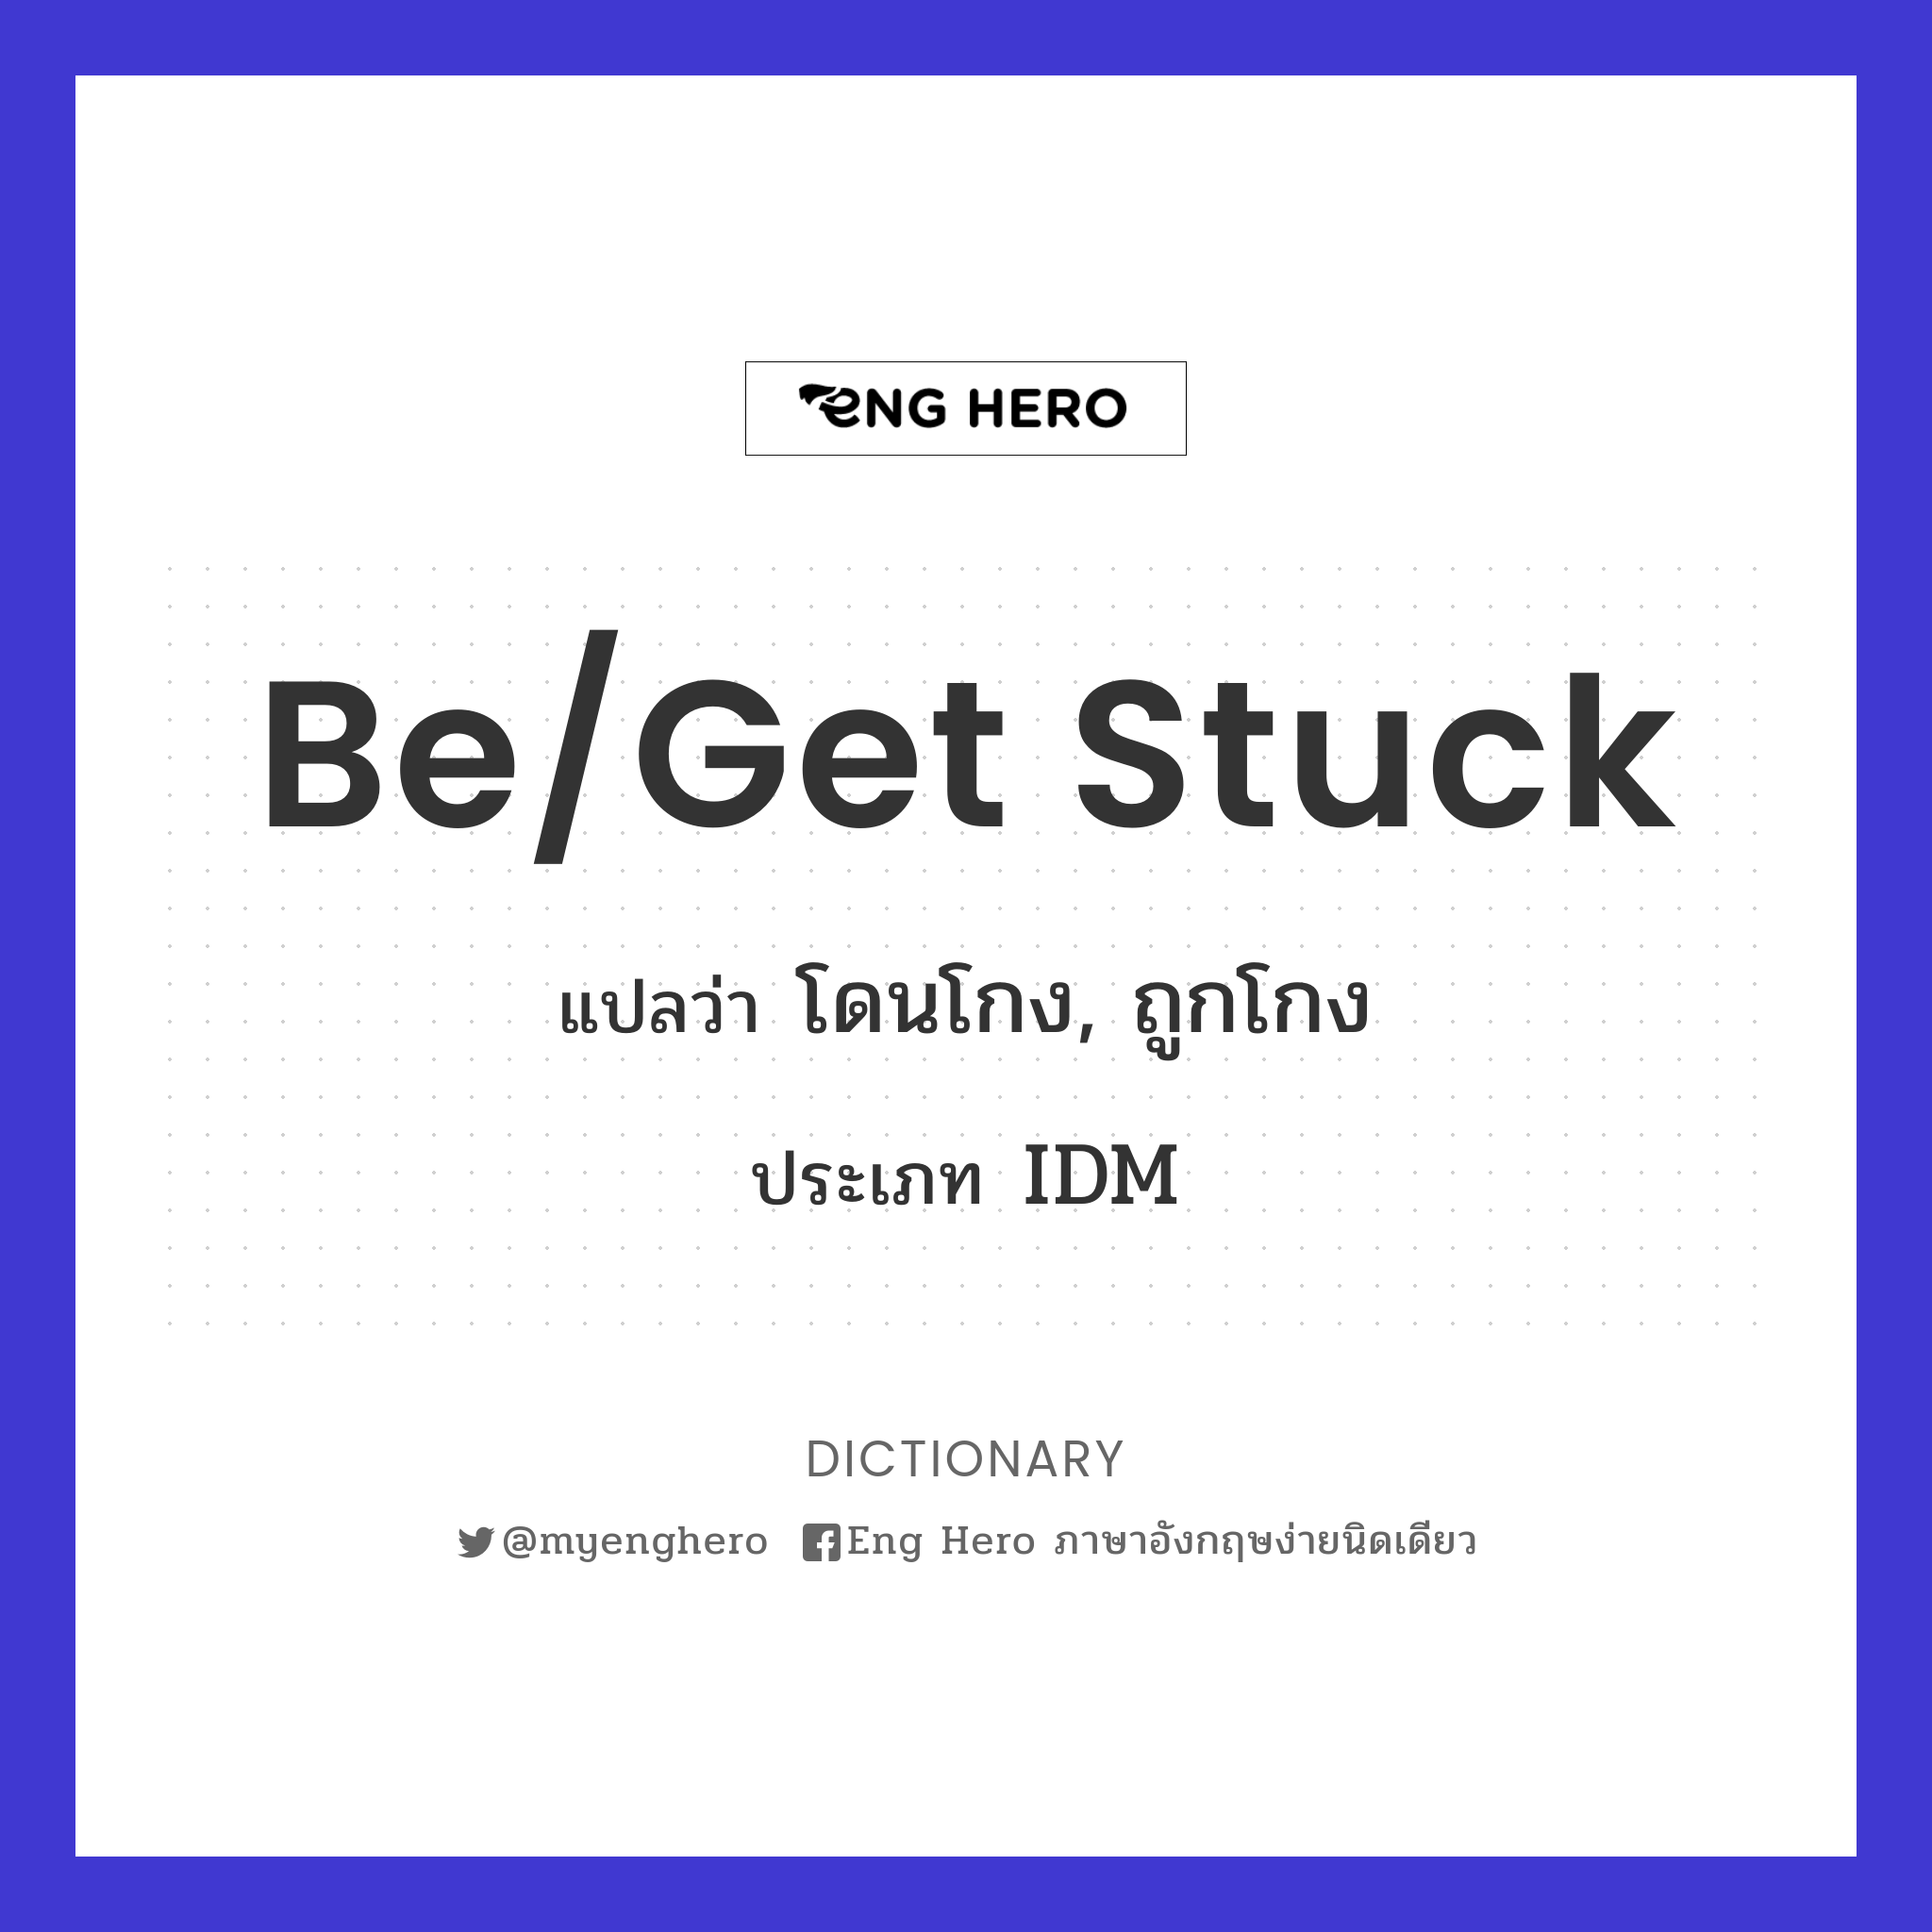 be/get stuck